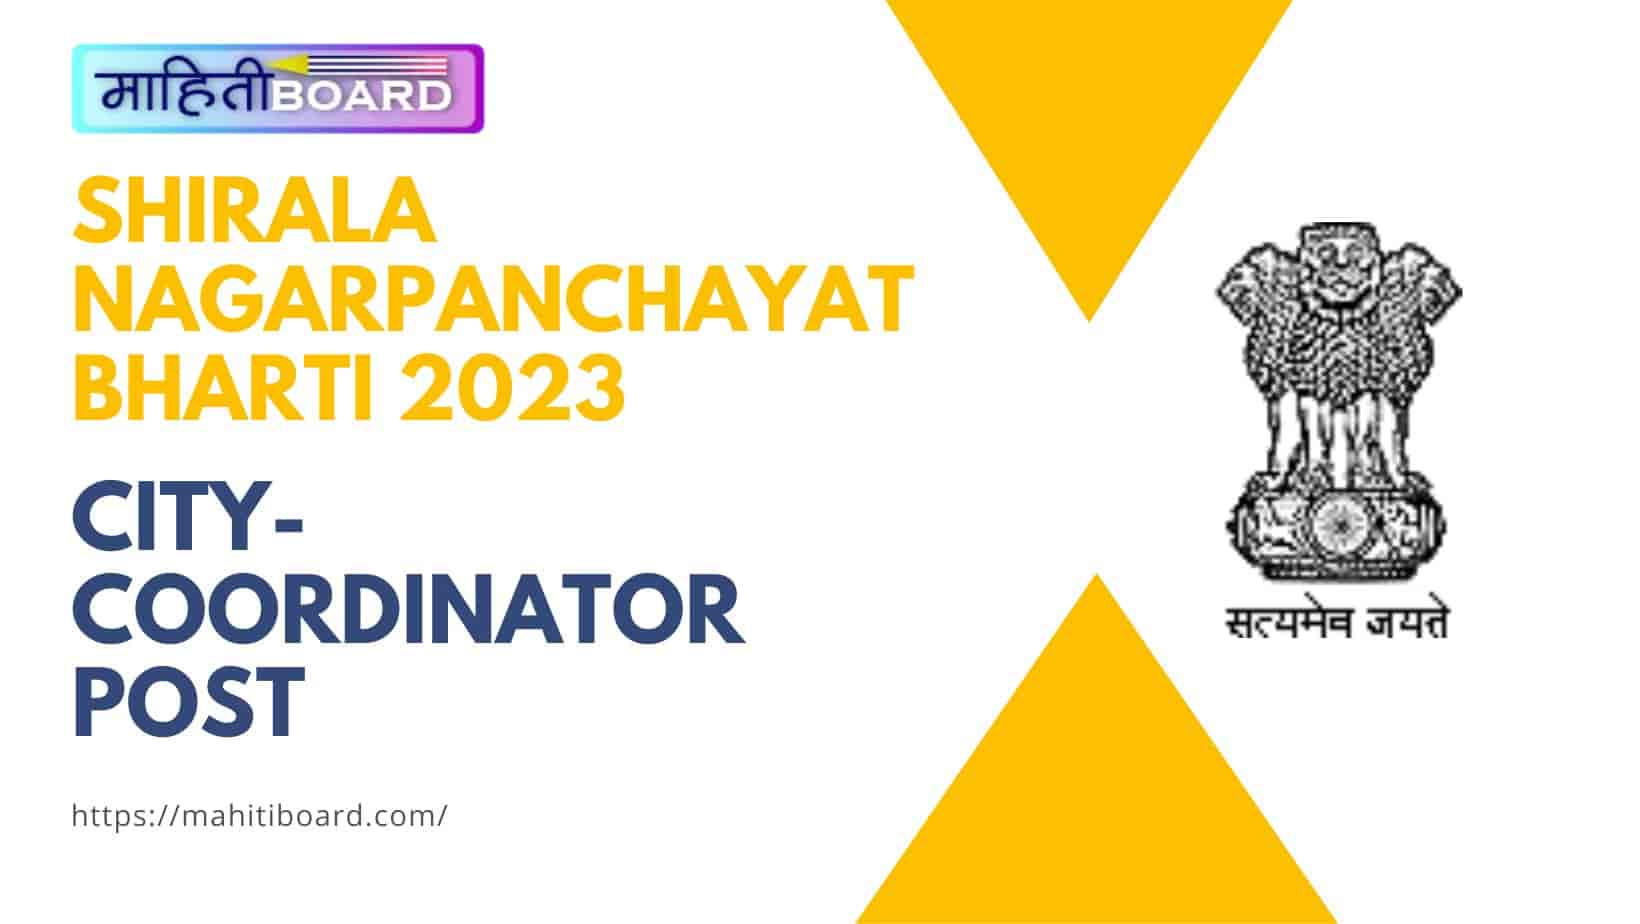 Shirala Nagarpanchayat Bharti 2023